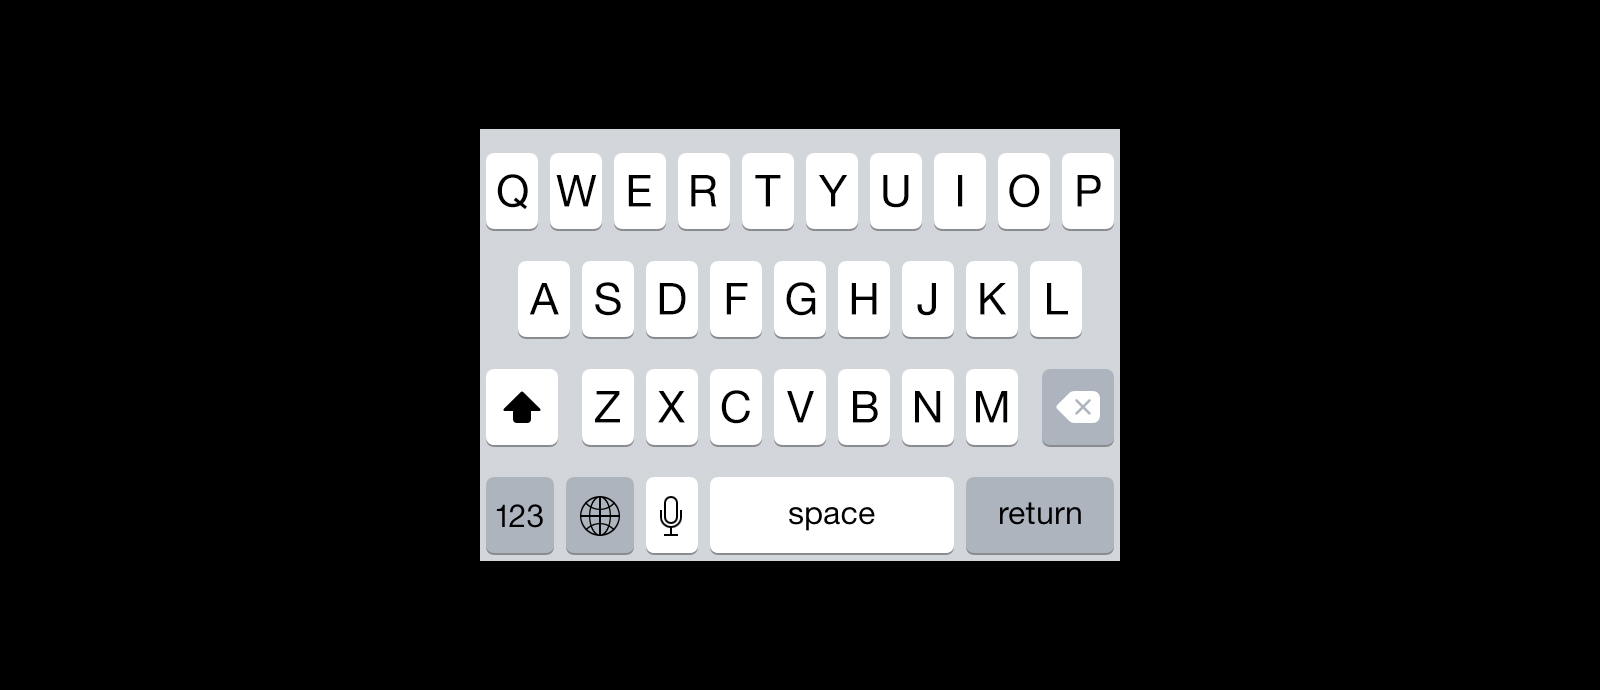 iOS 7 Shift Key is Broken